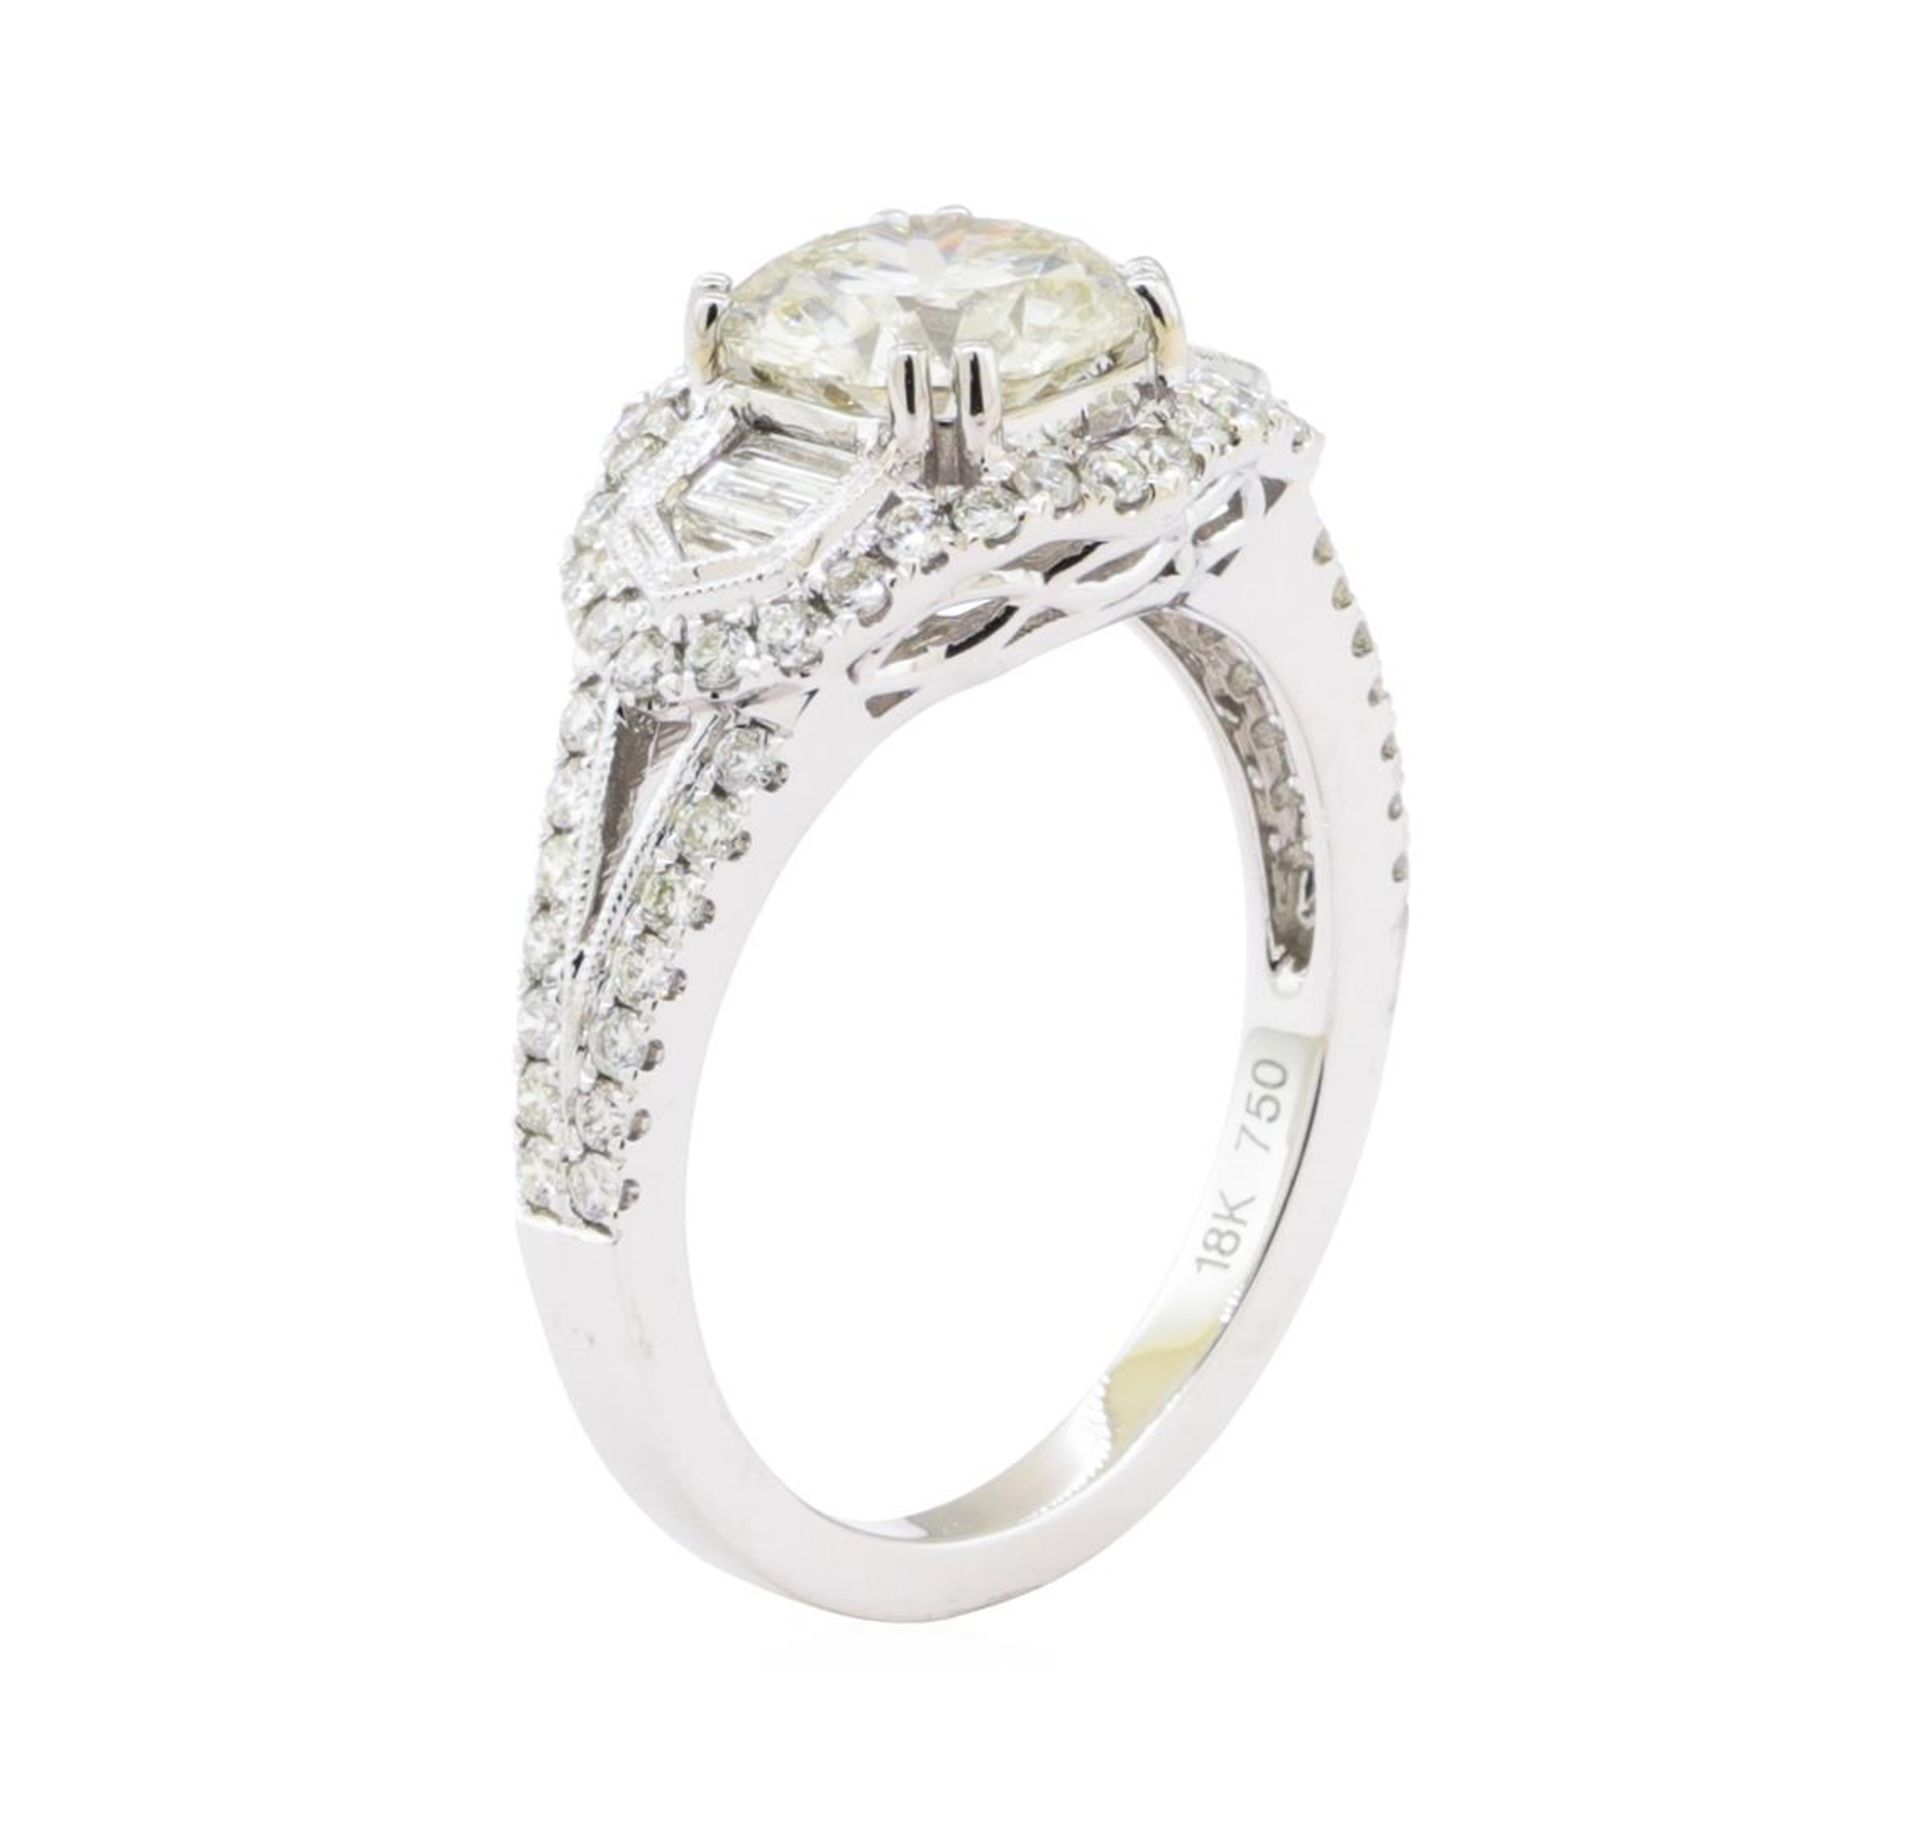 1.50 ctw Diamond Ring - 18KT White Gold - Image 4 of 4